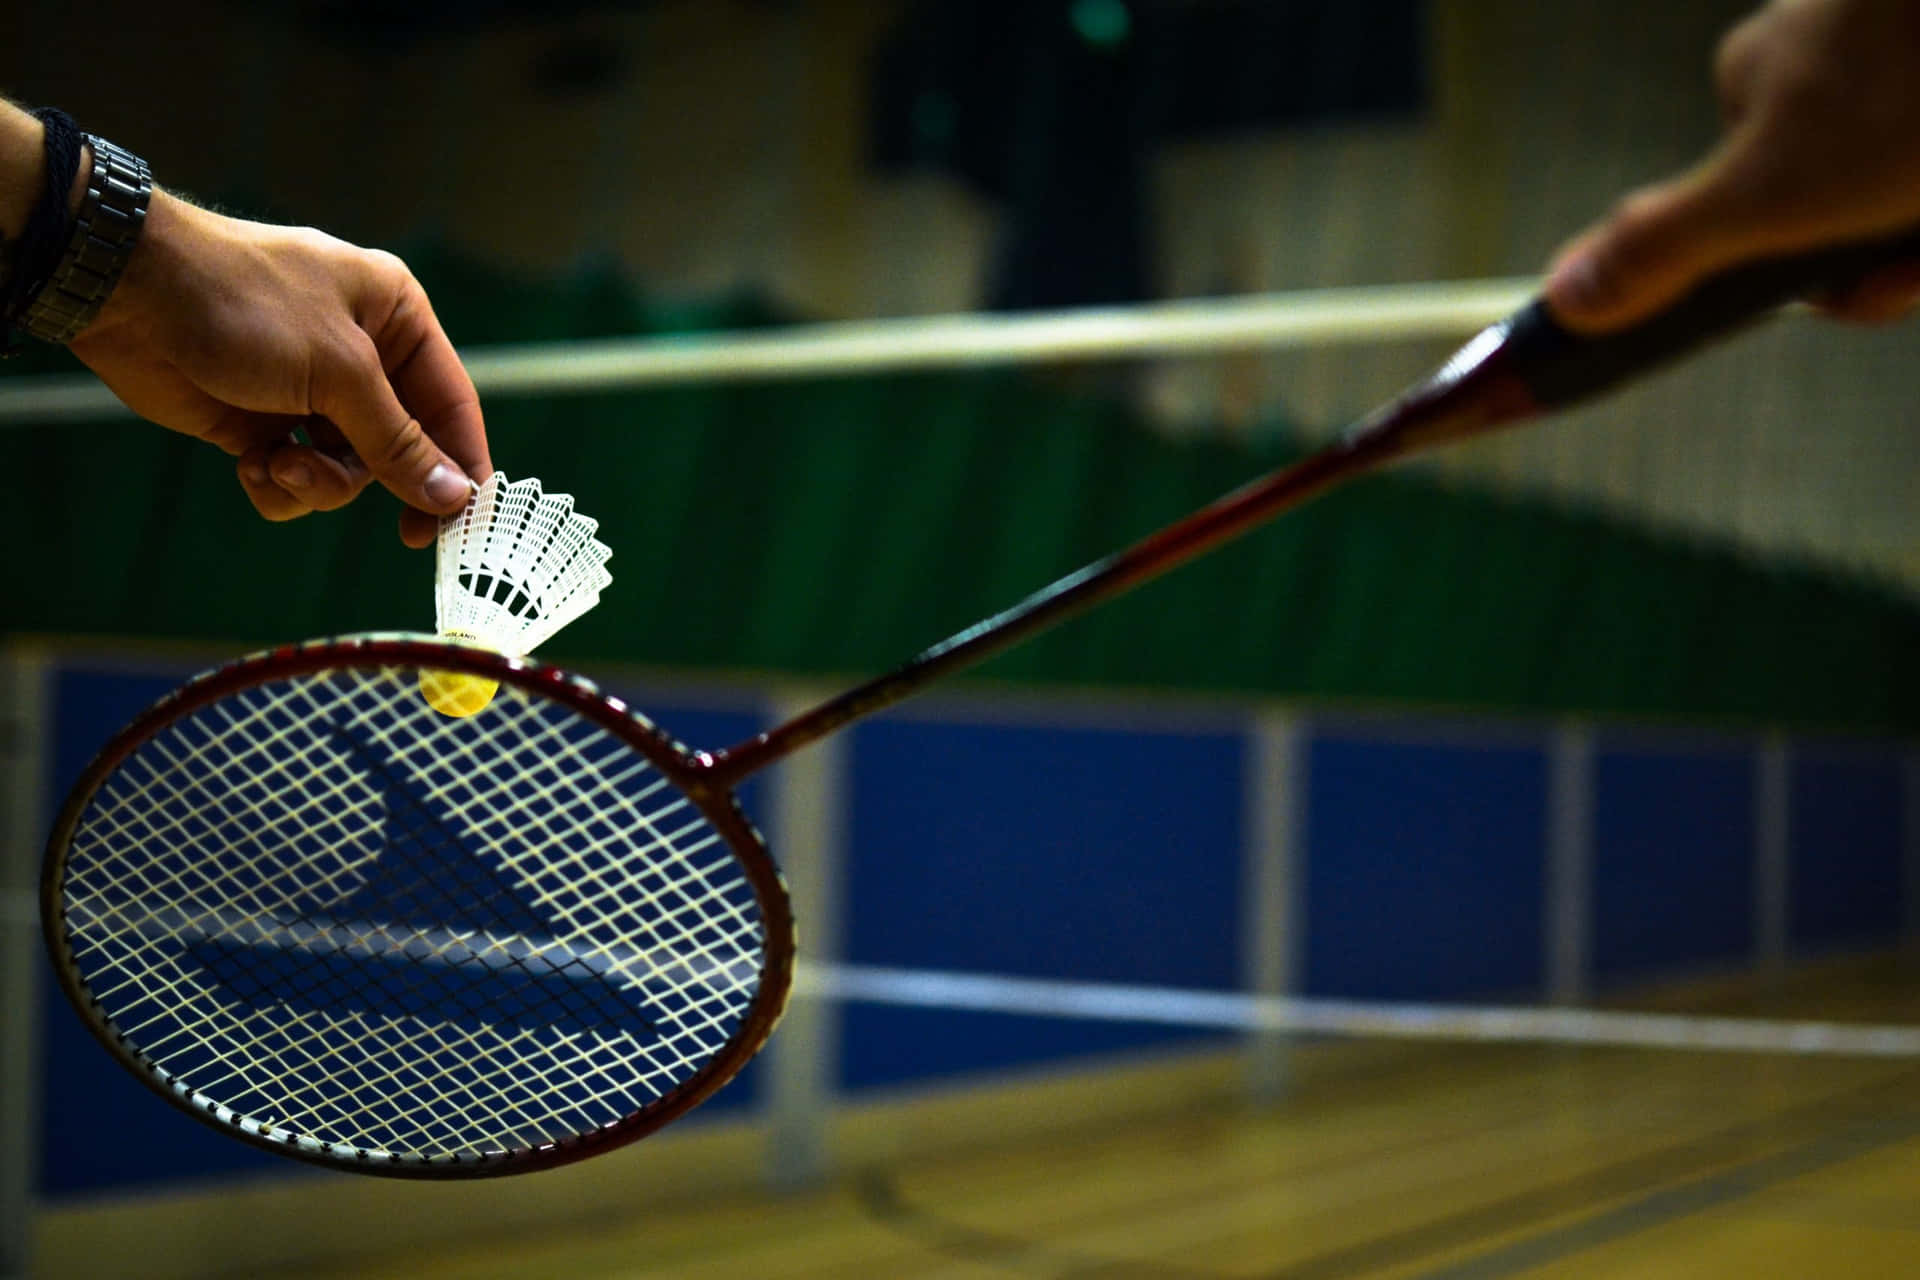 A Person Holding A Badminton Racket